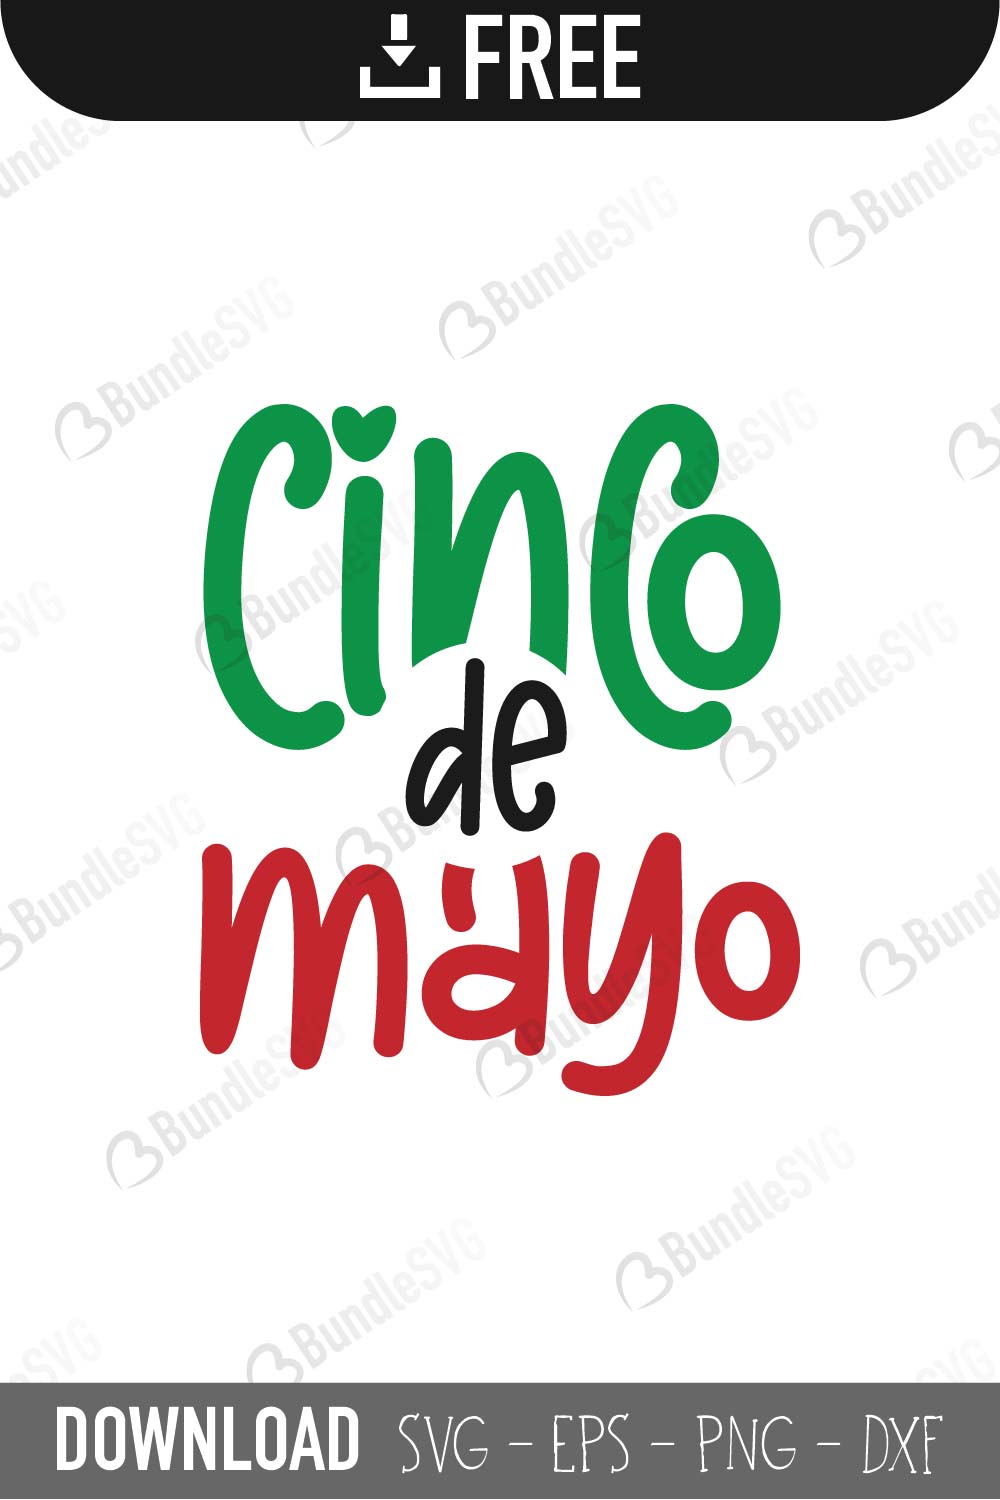 Download Cinco De Mayo SVG Cut Files Free Download | BundleSVG.com